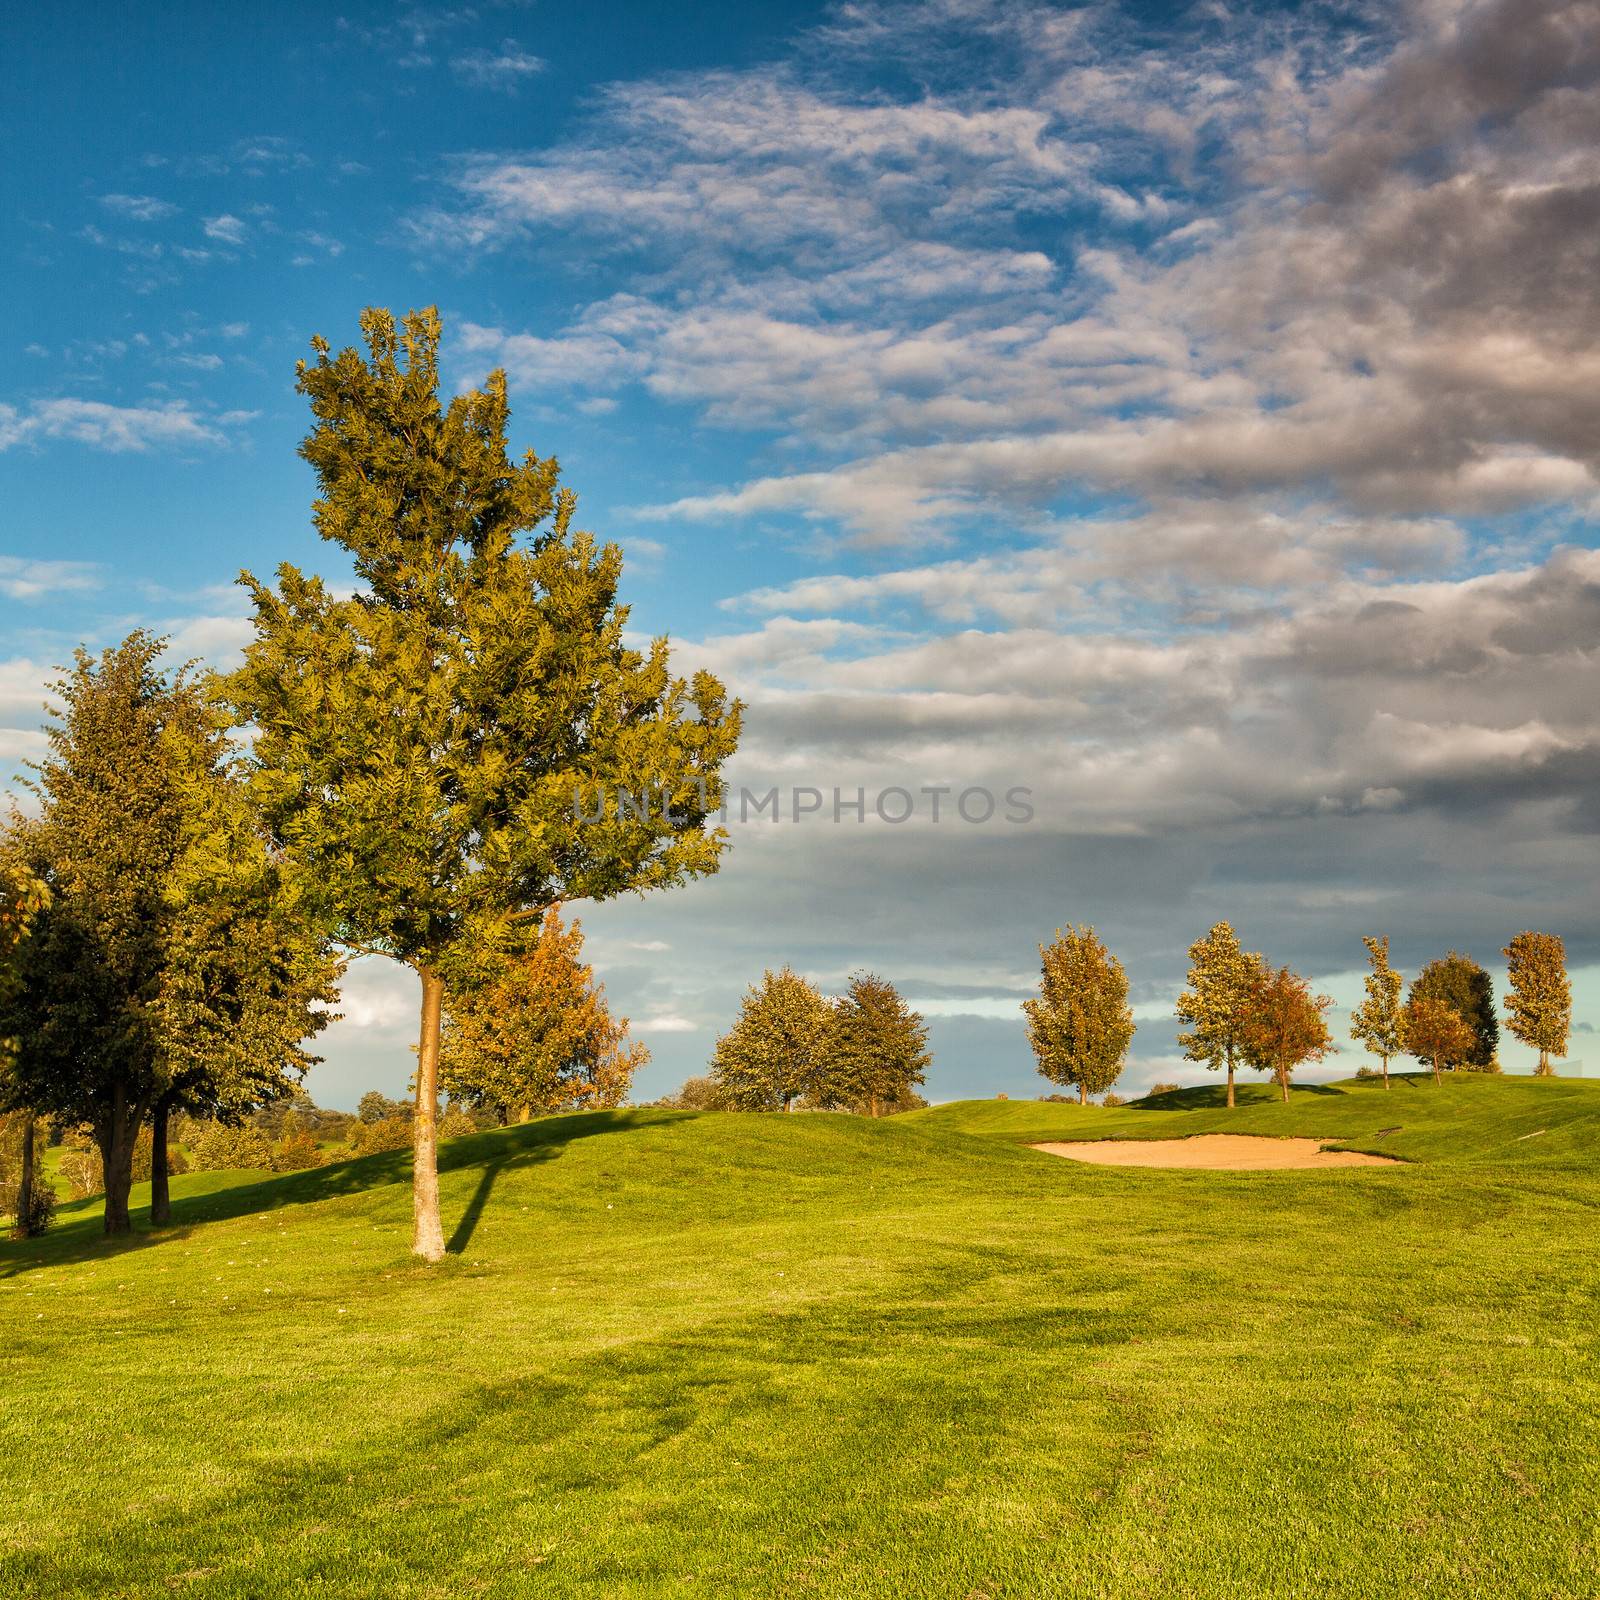 Summer golf course at sunset by CaptureLight